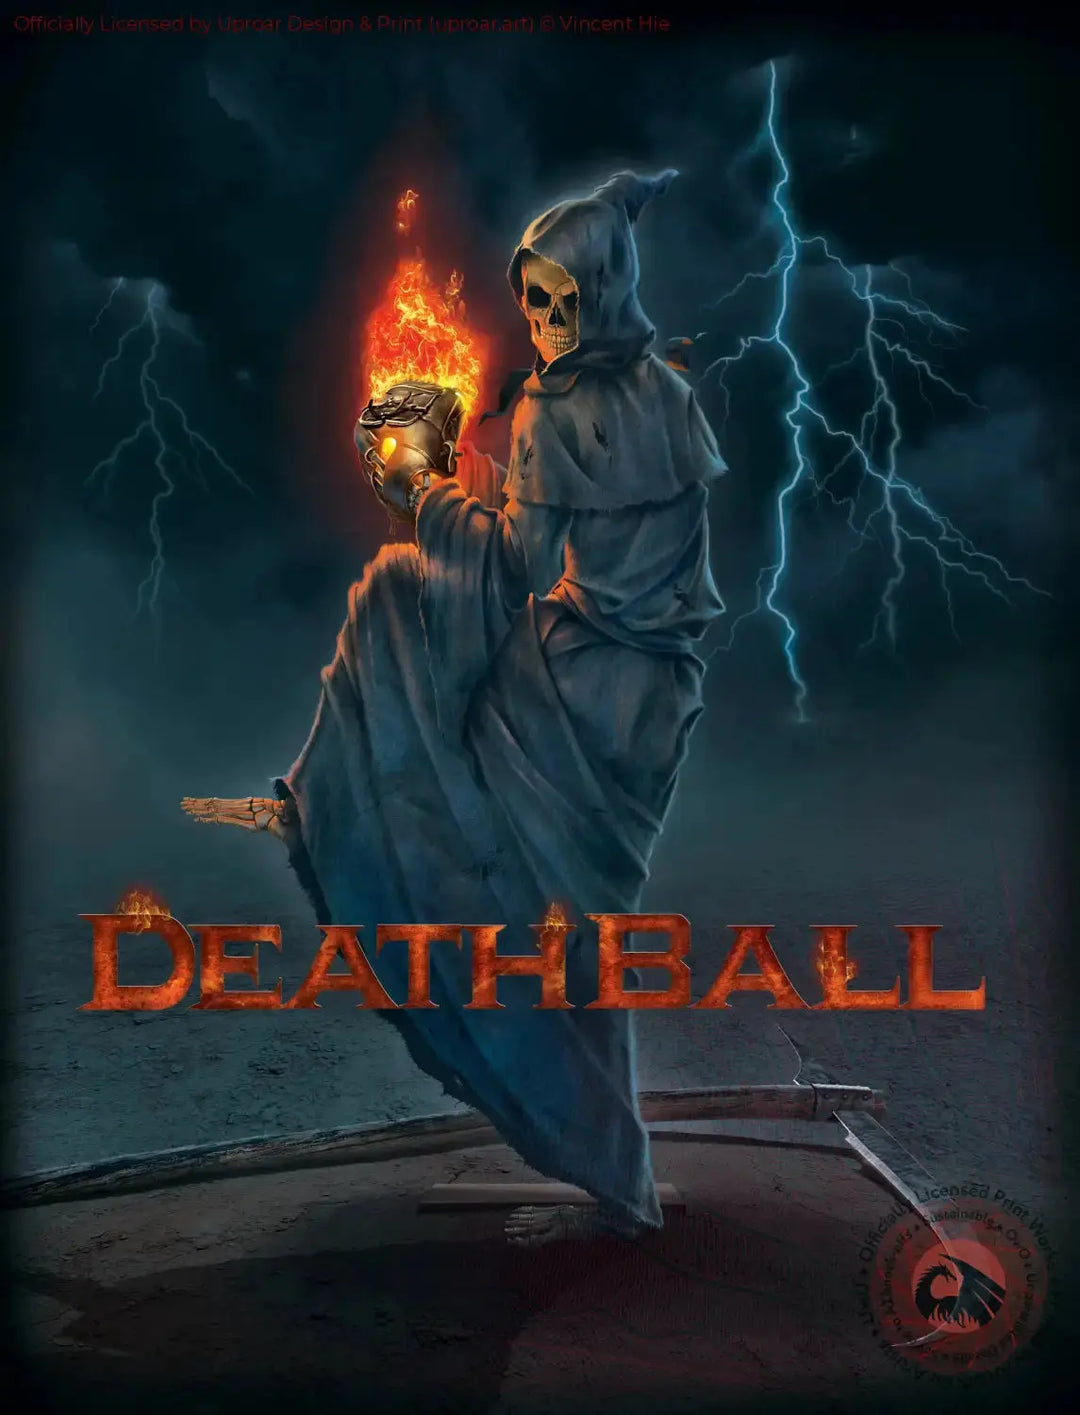 Death Ball Vincent Hie